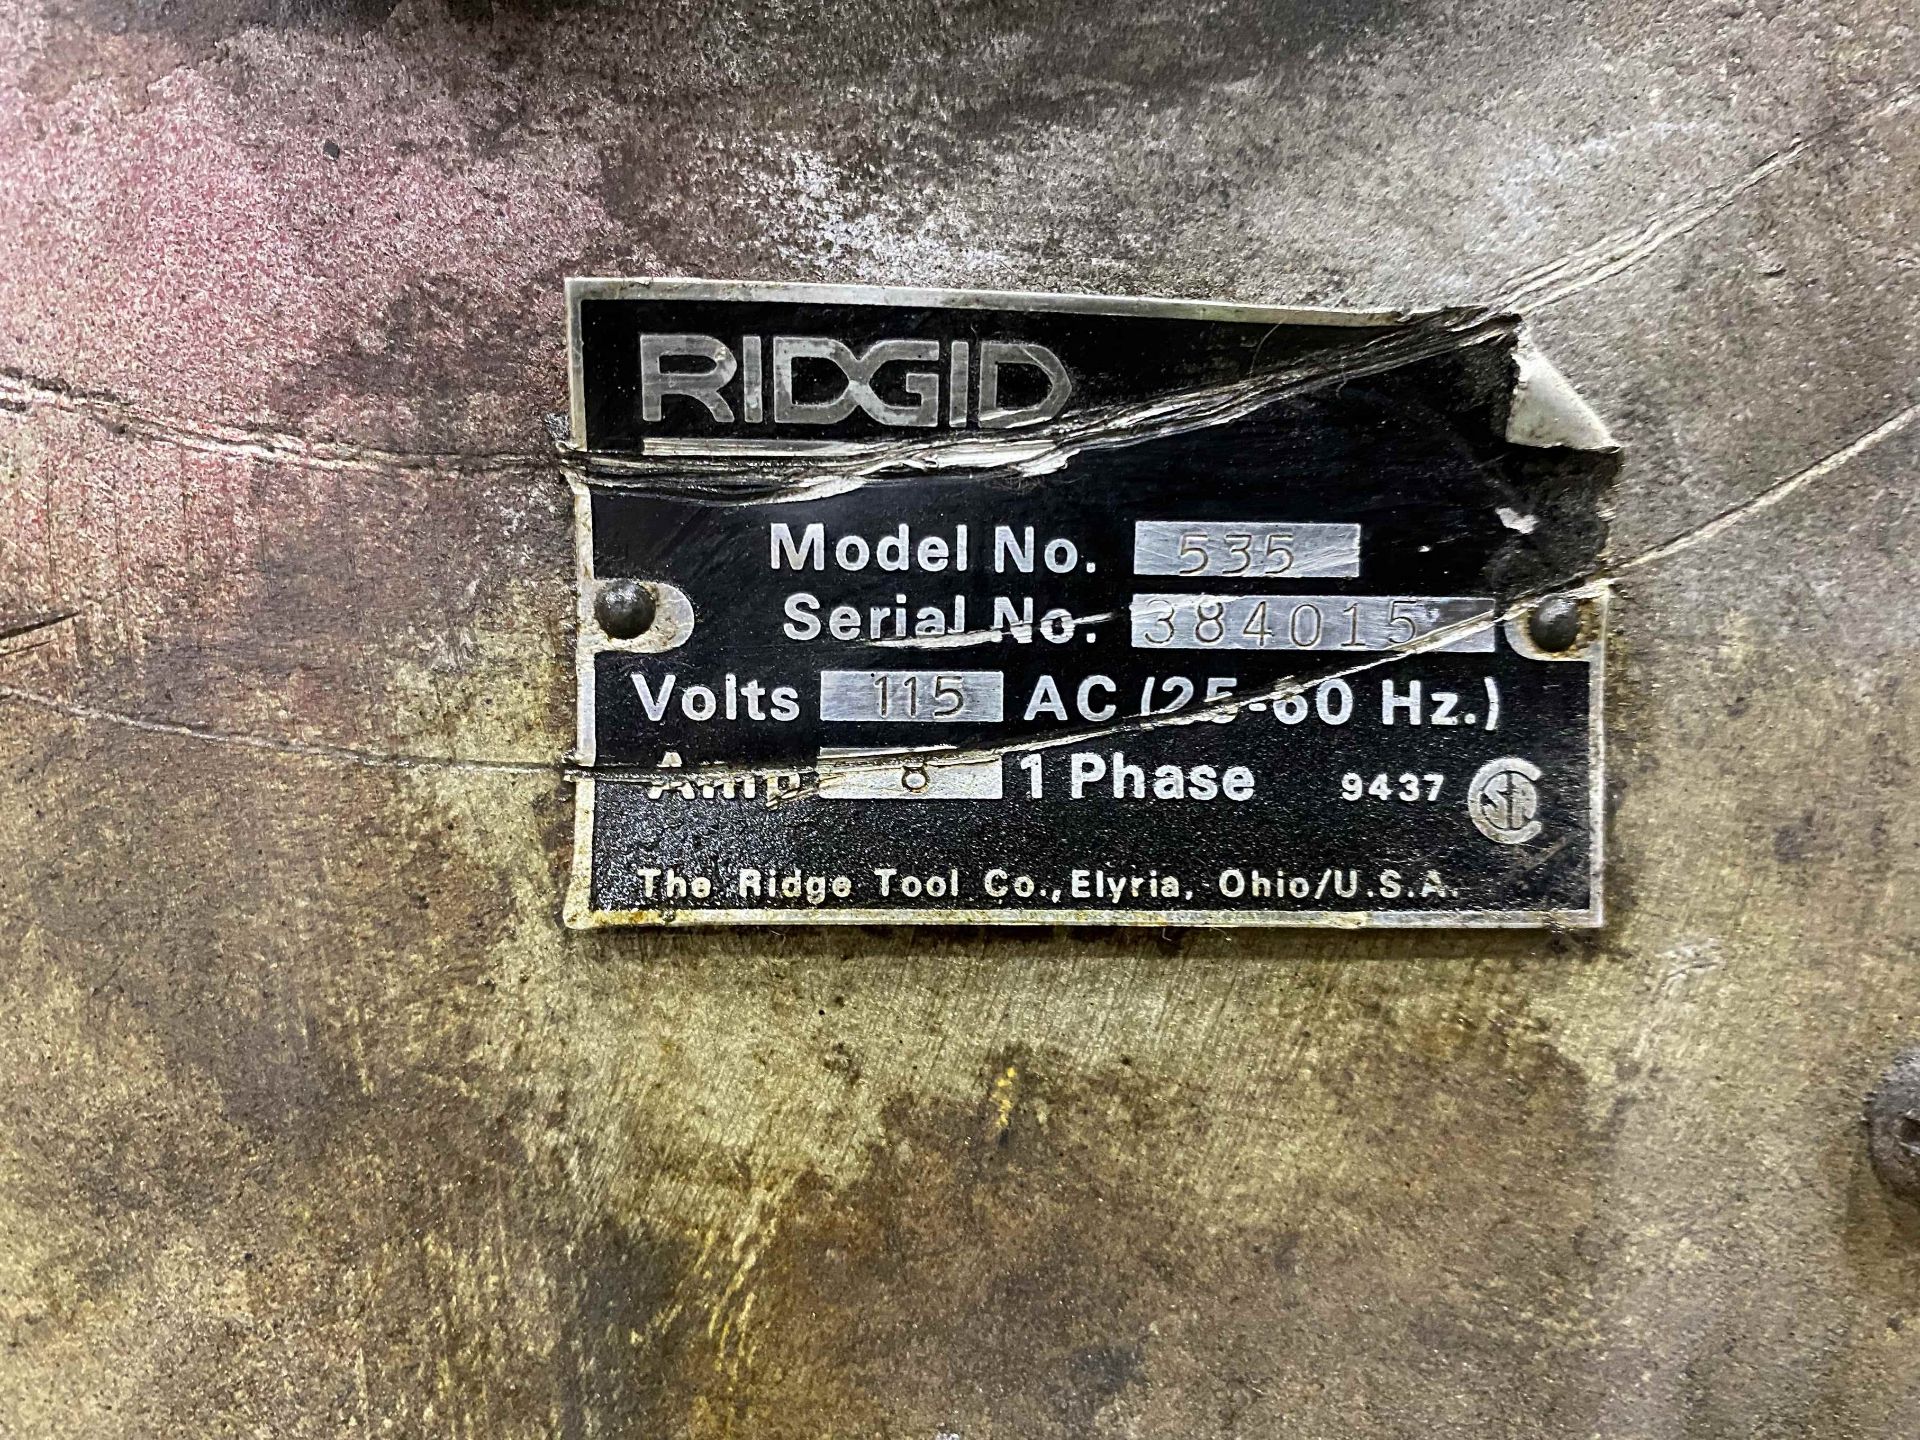 RIDGID 535 Pipe Threader, s/n 384015 - Image 5 of 5